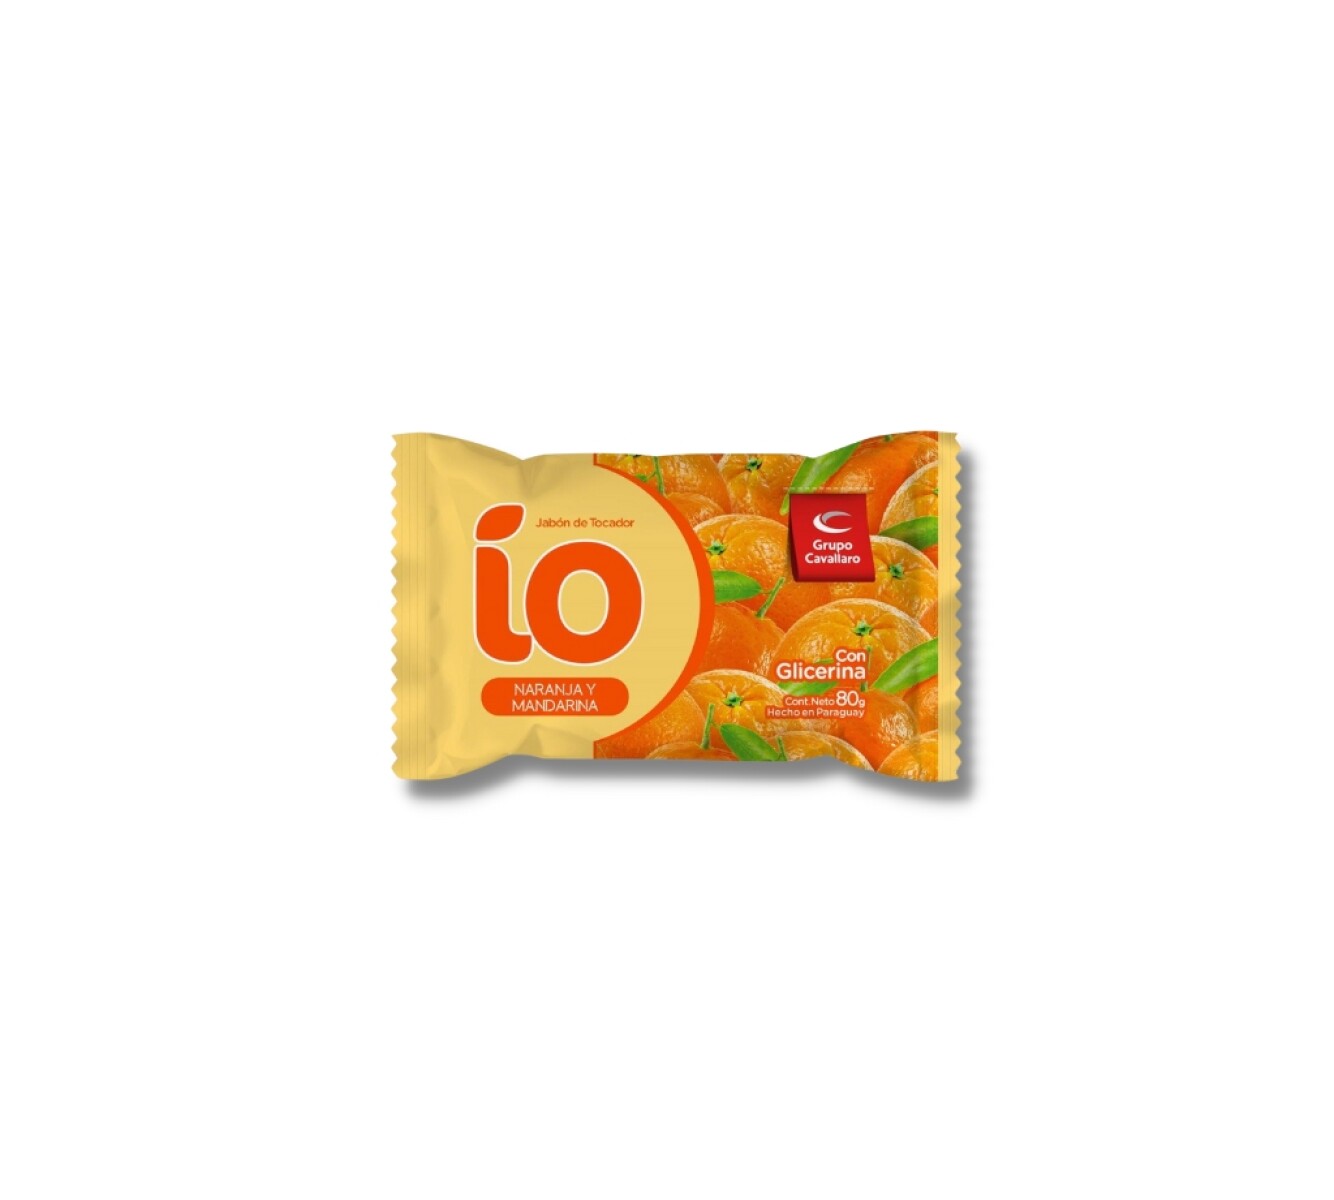 Jabón IO Cavallaro 80 g con glicerina - Naranja y Mandarina 